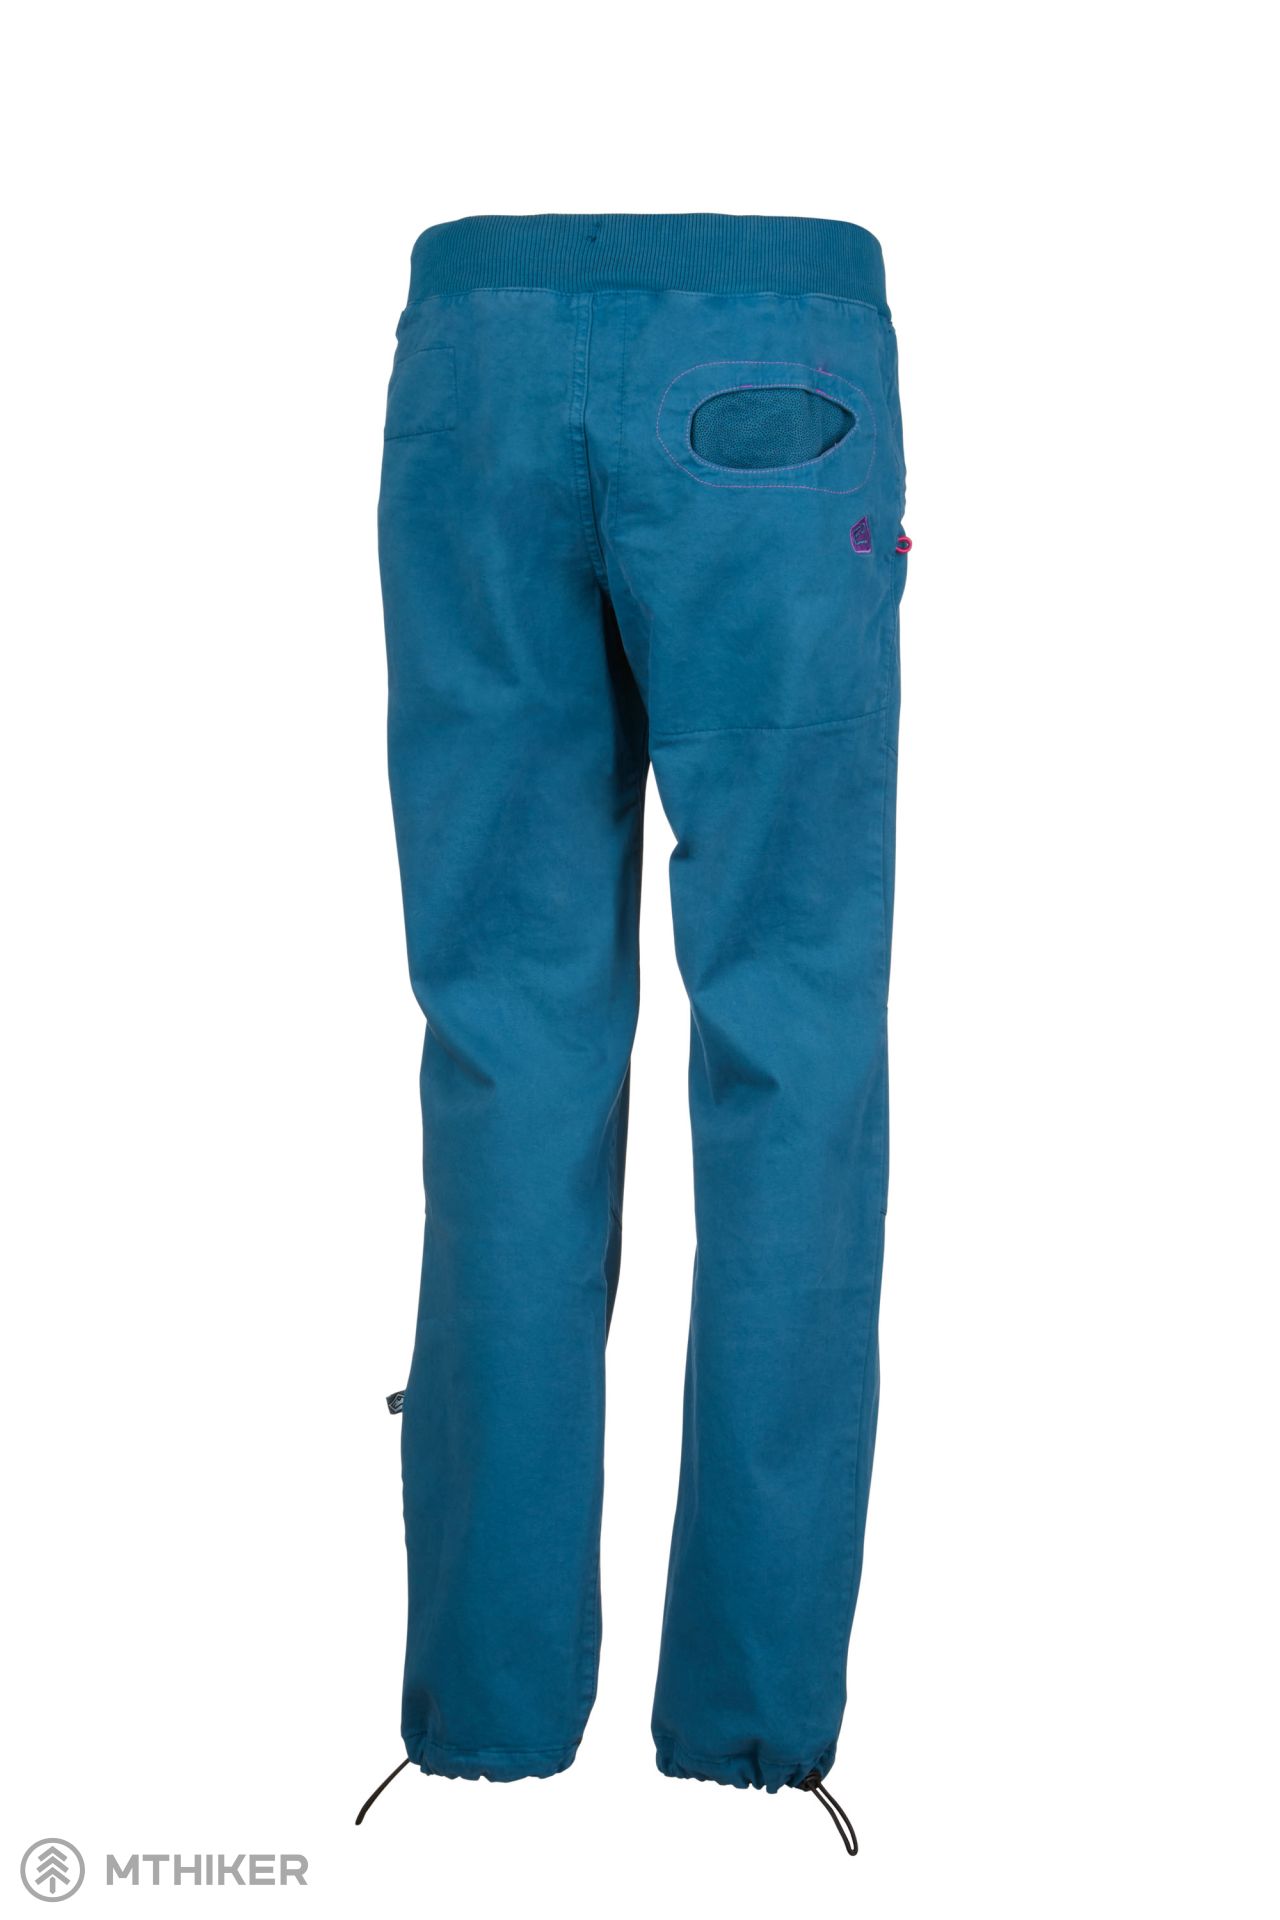 E9 Onda Slim 2 women's pants, deep blue 